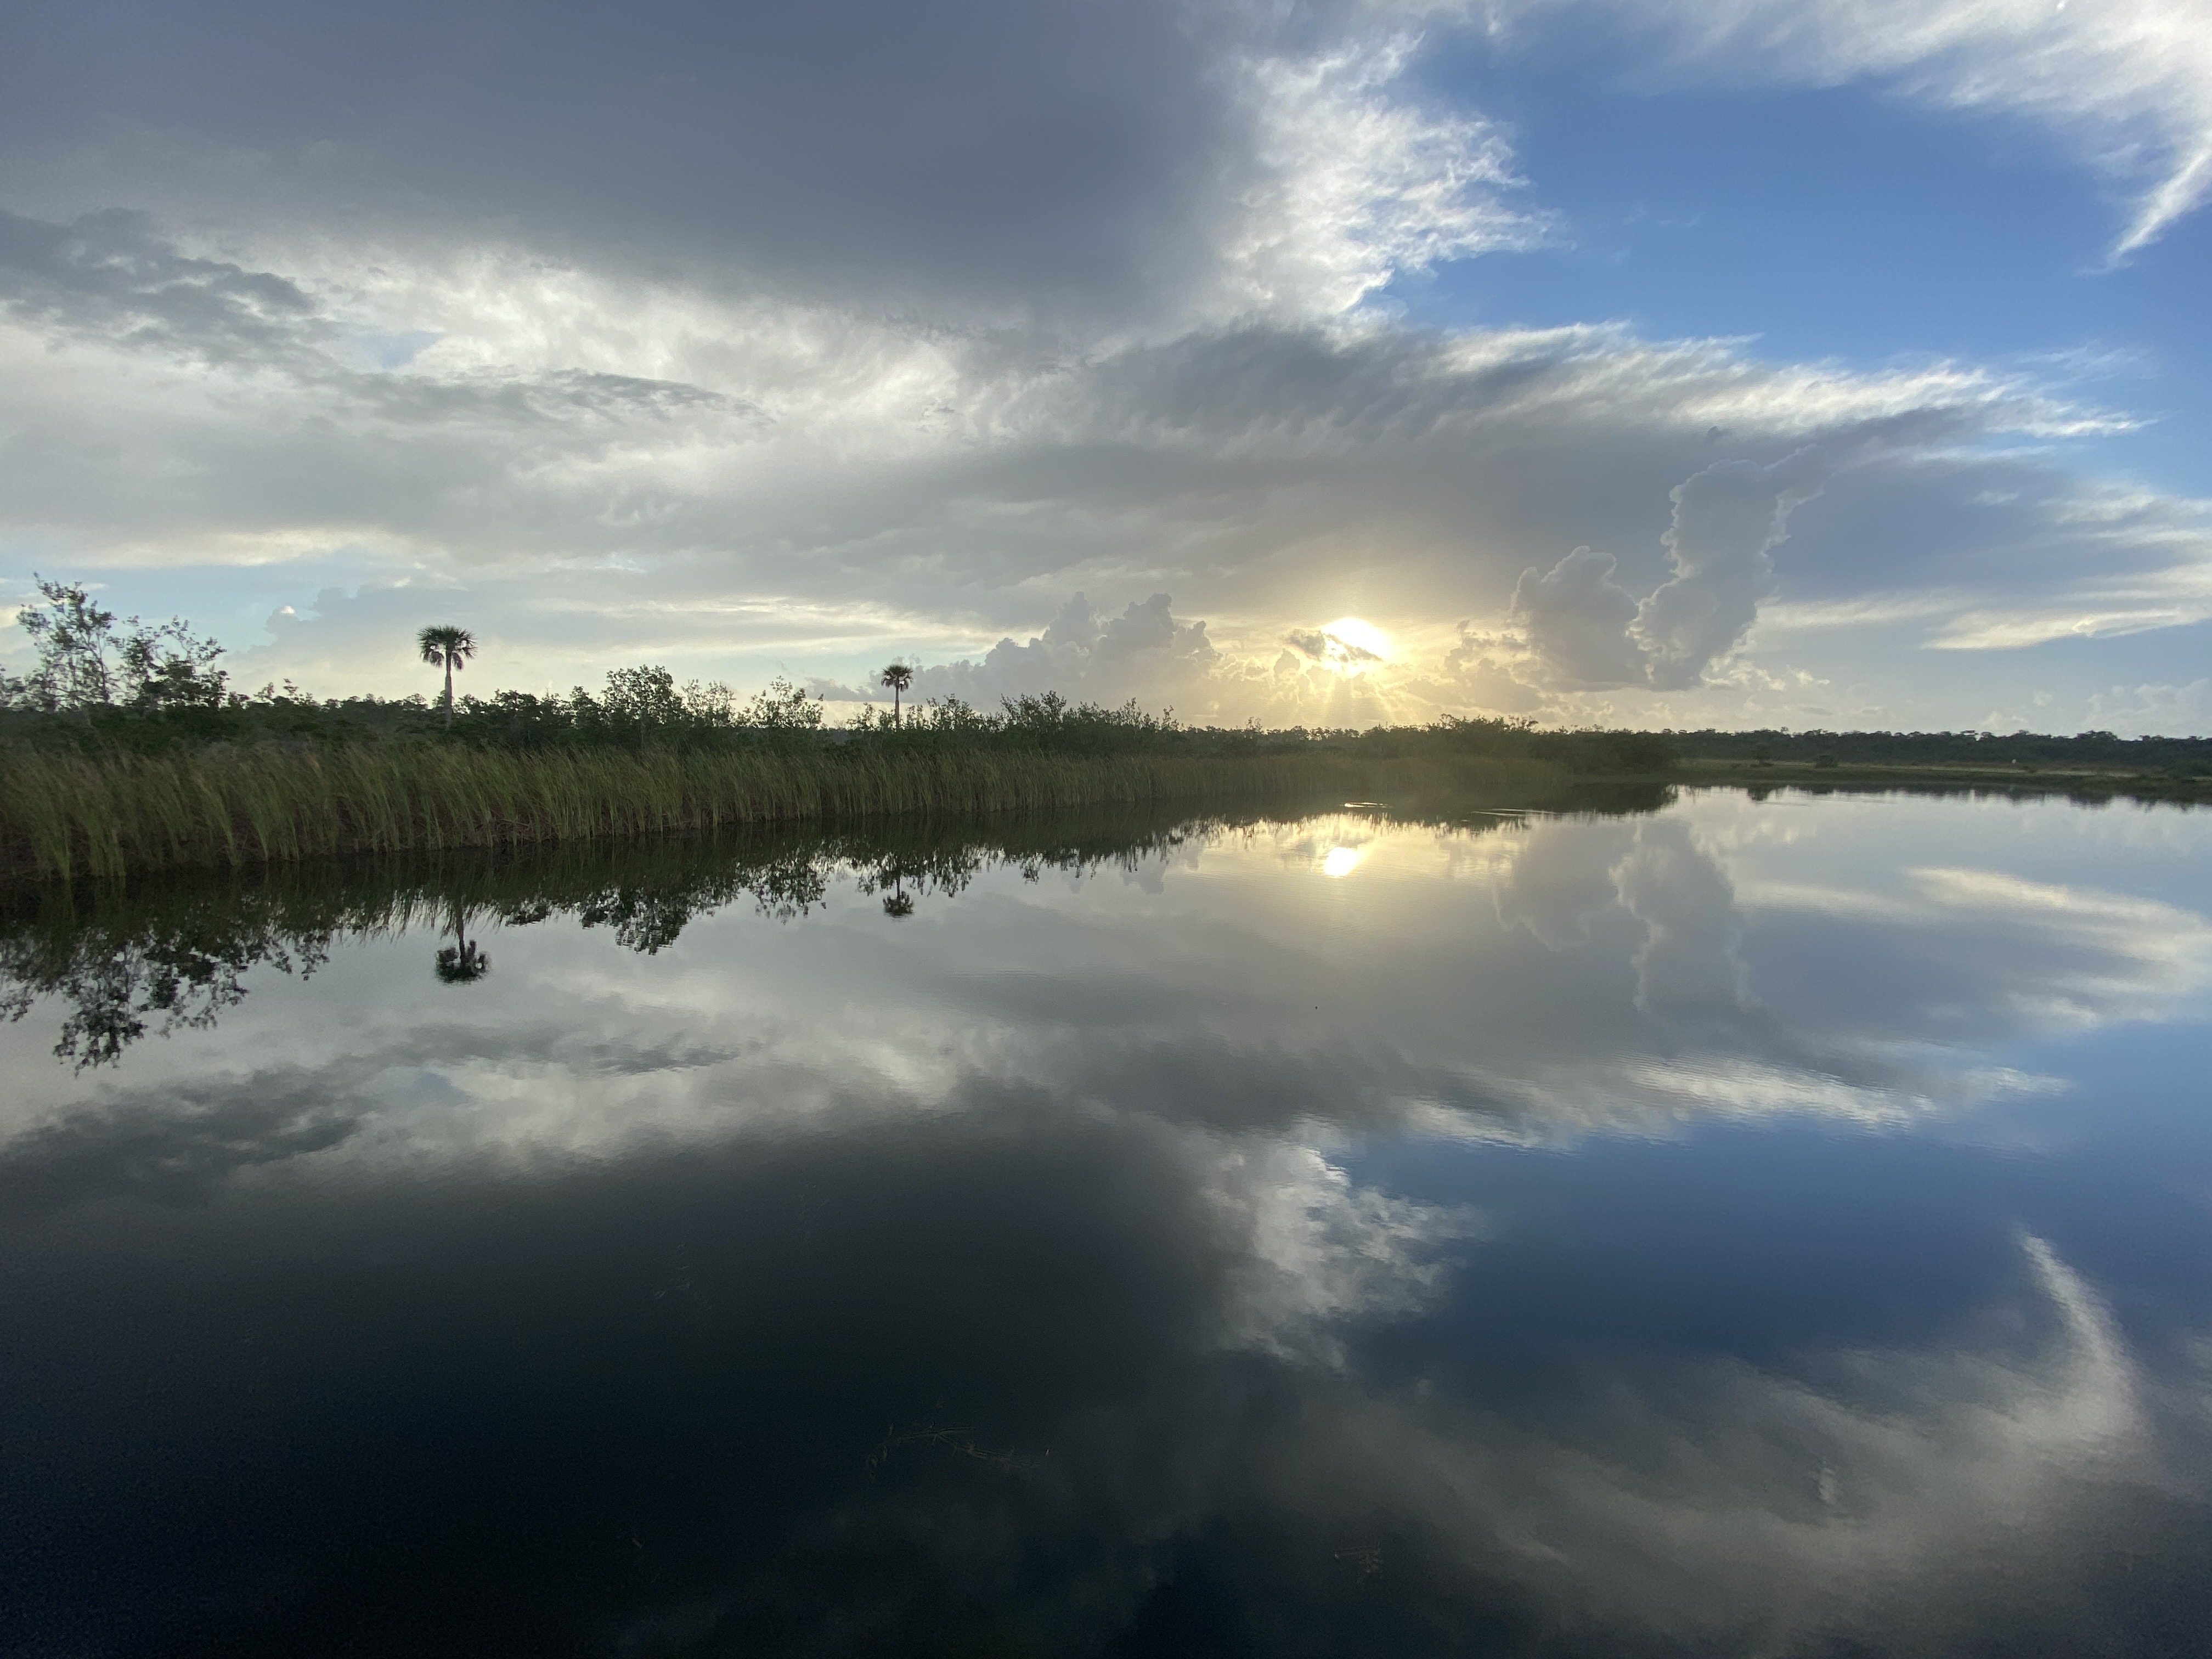 Everglades NP